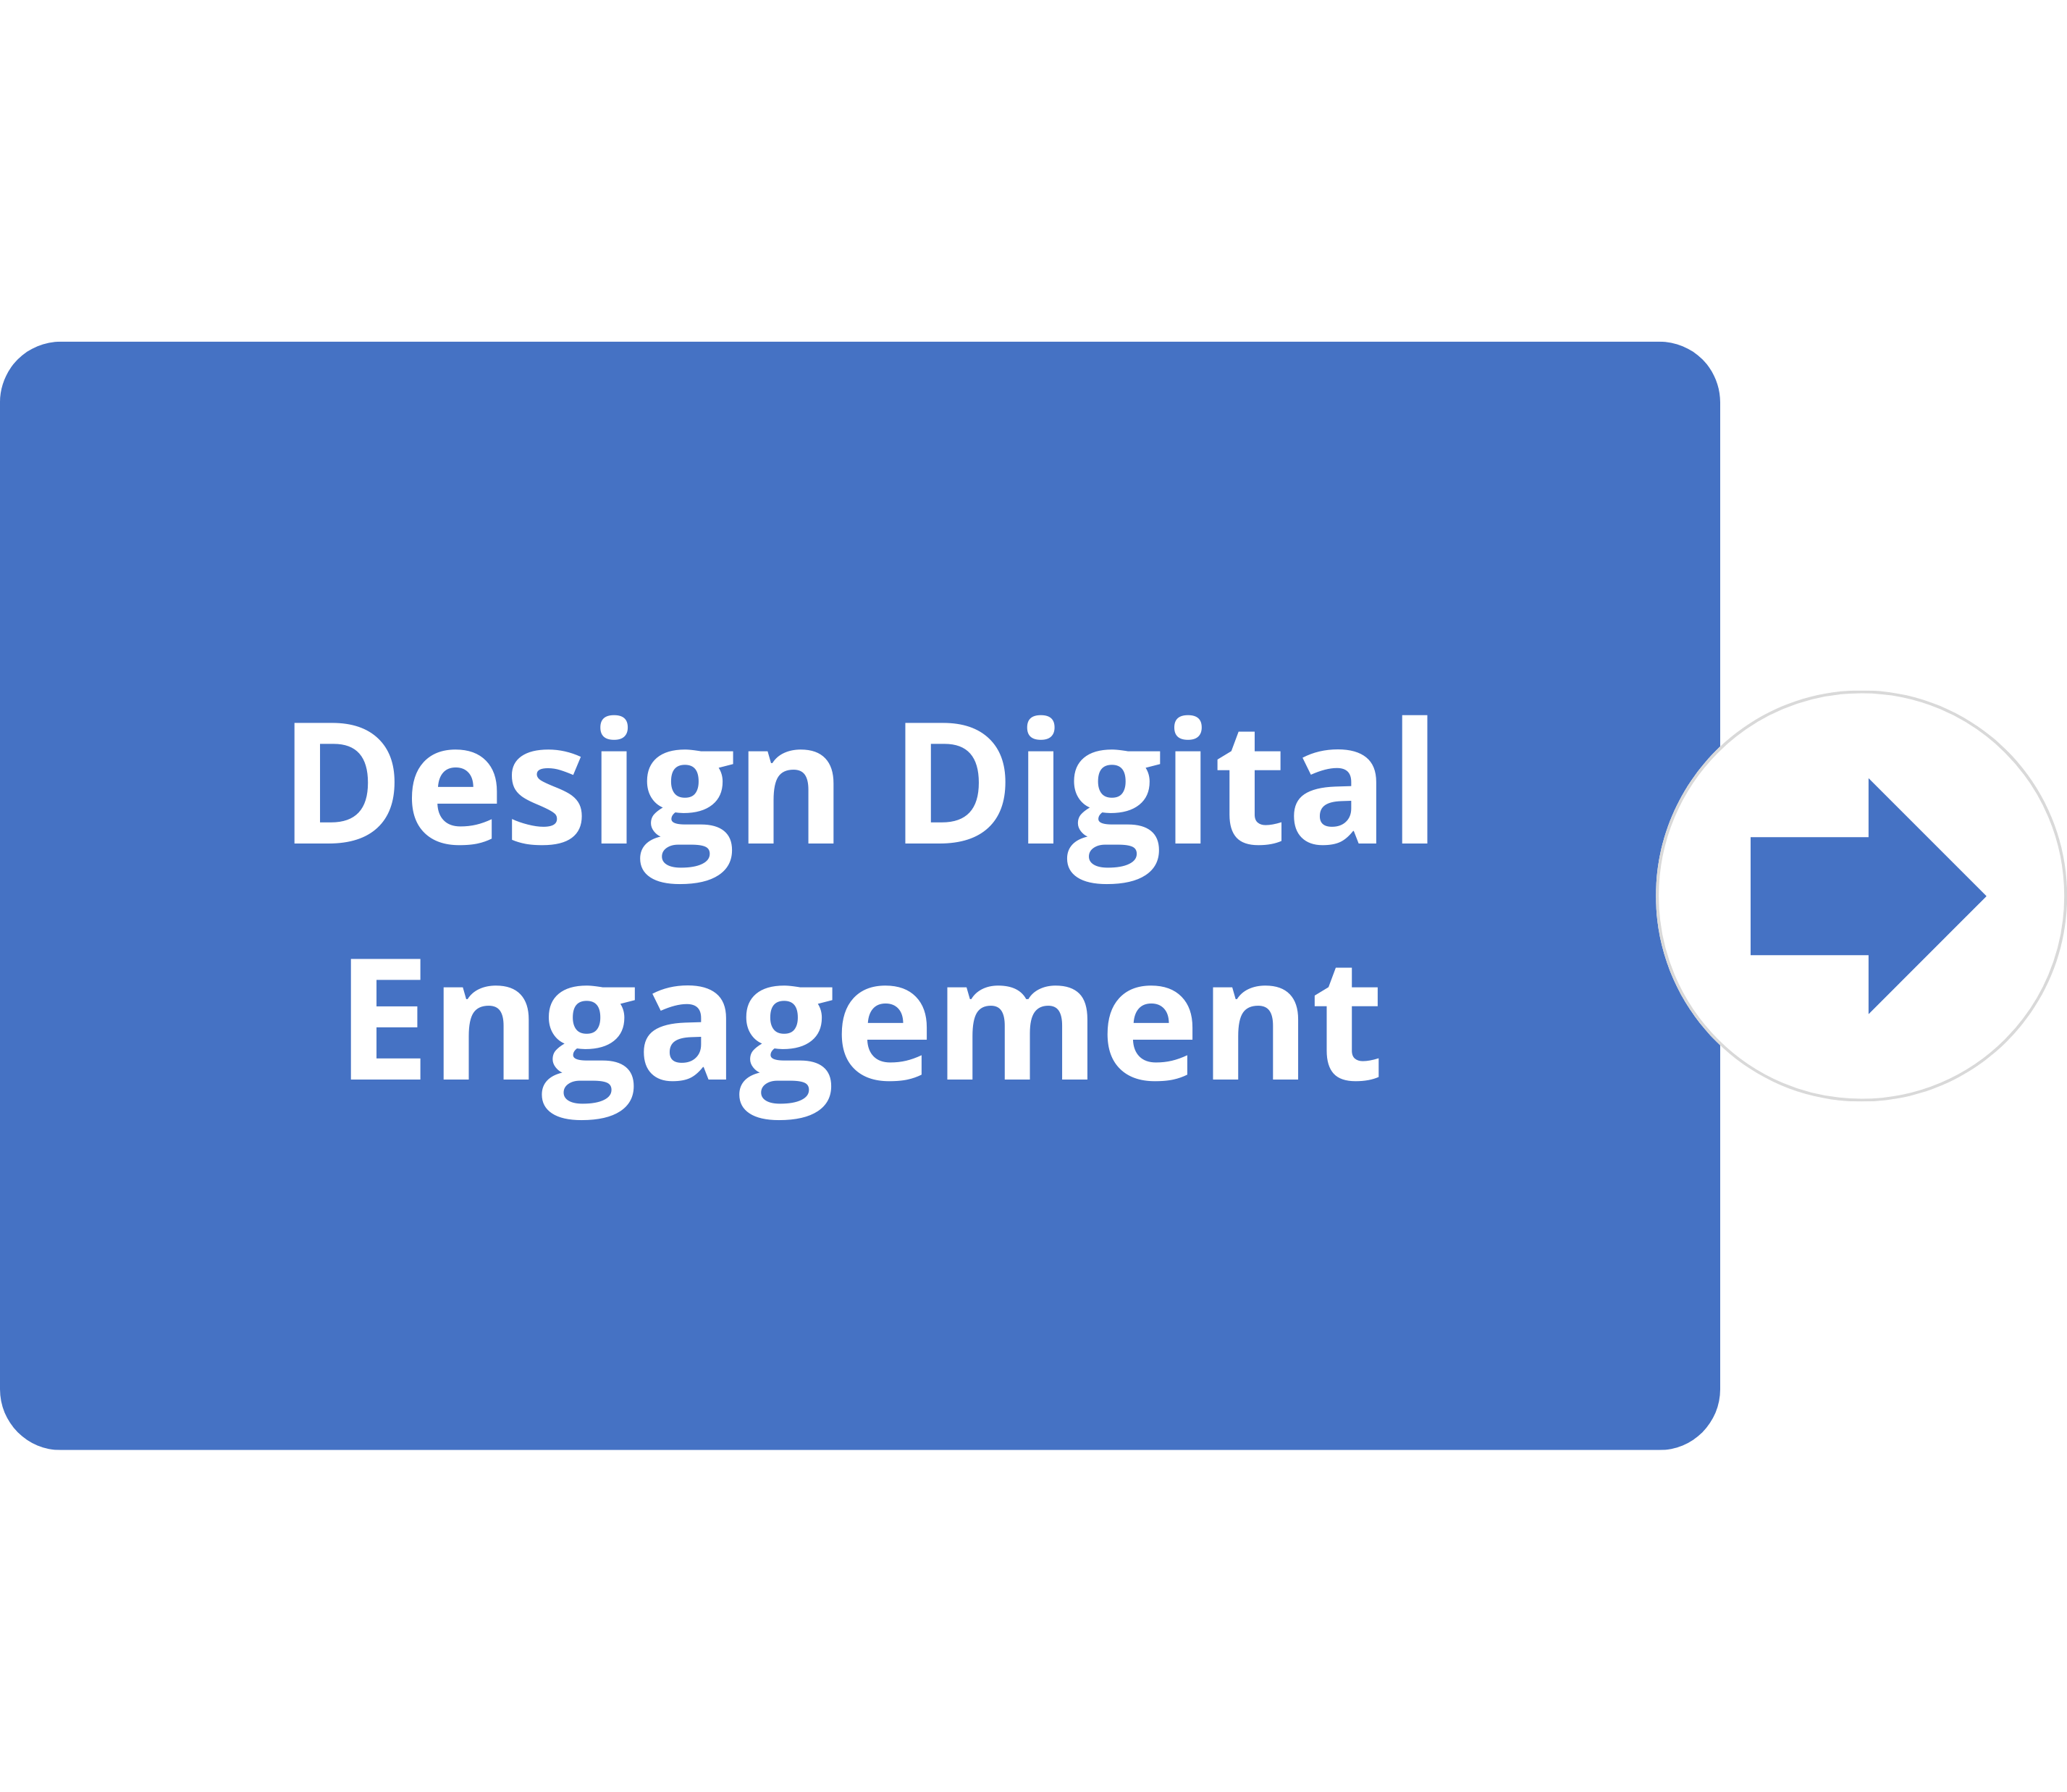 Design Digital Engagement